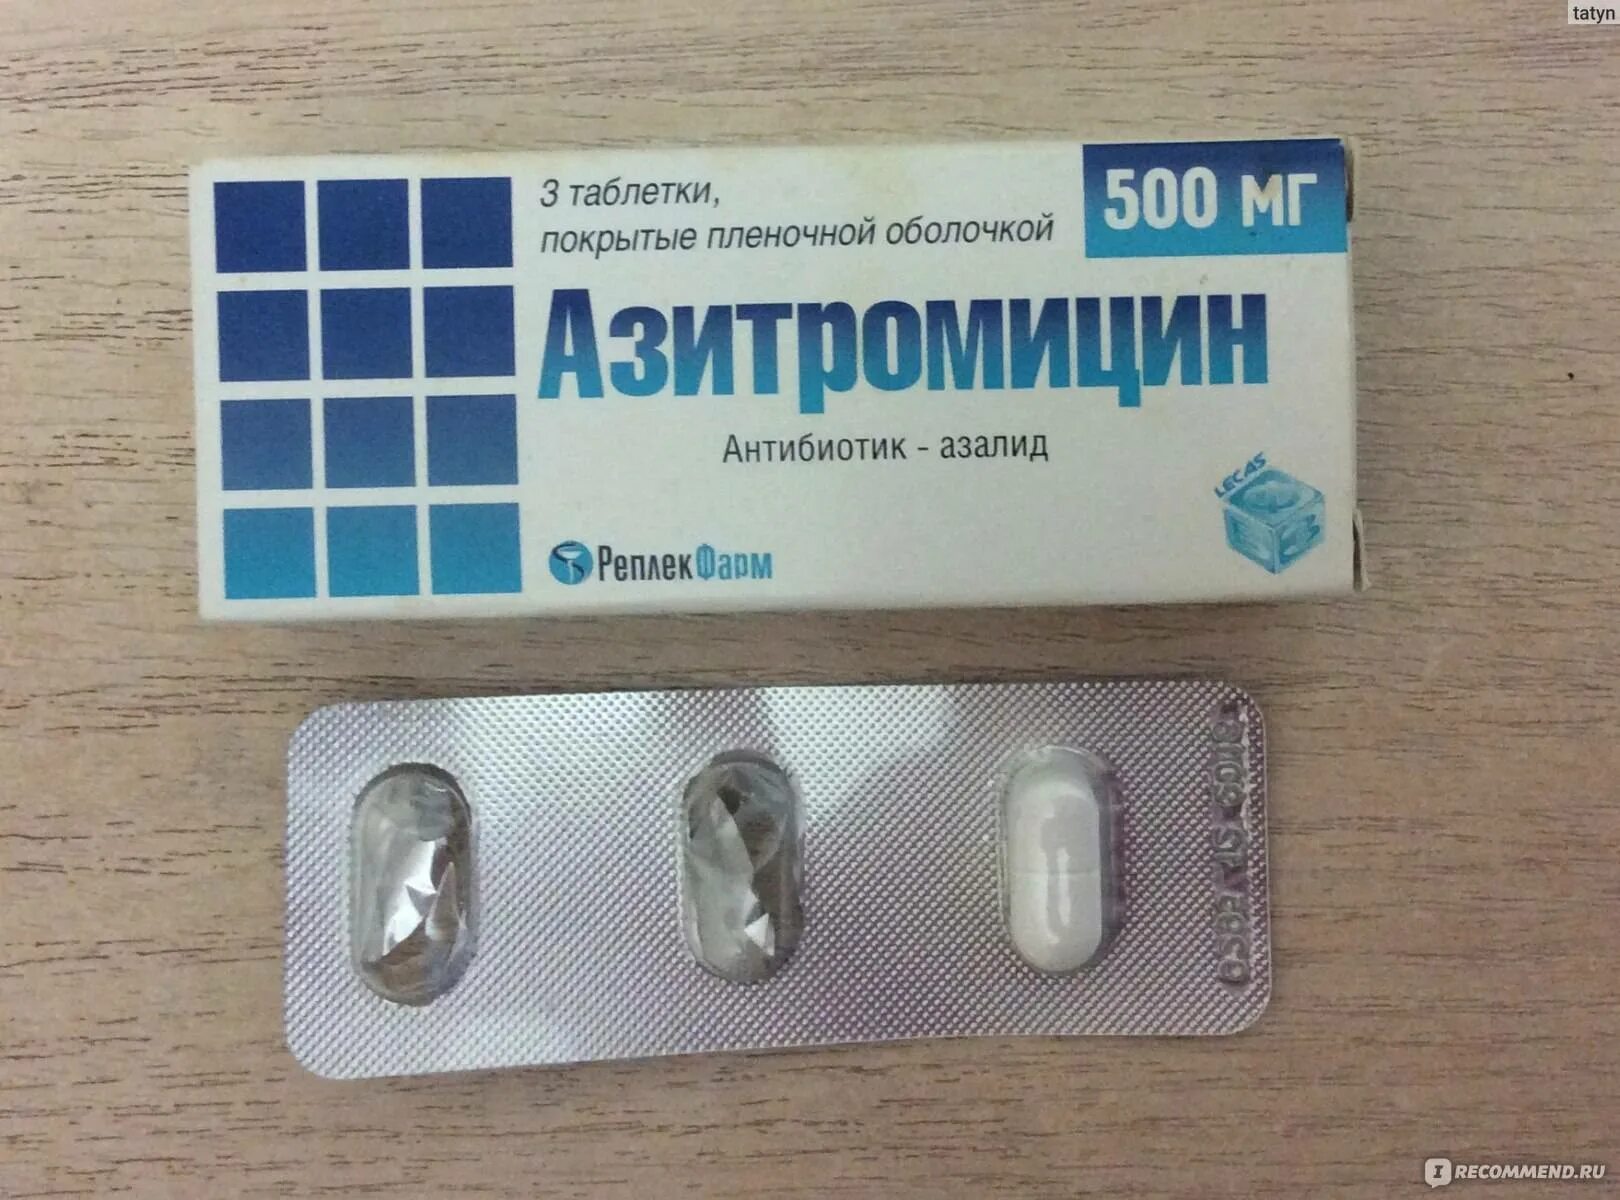 Антибиотик Азитромицин 500 мг. Антибиотик 3 таблетки в упаковке Азитромицин. Антибиотик от кашля 3 таблетки название. Сильный антибиотик от простуды 3 таблетки. Какой антибиотик при сильном кашле